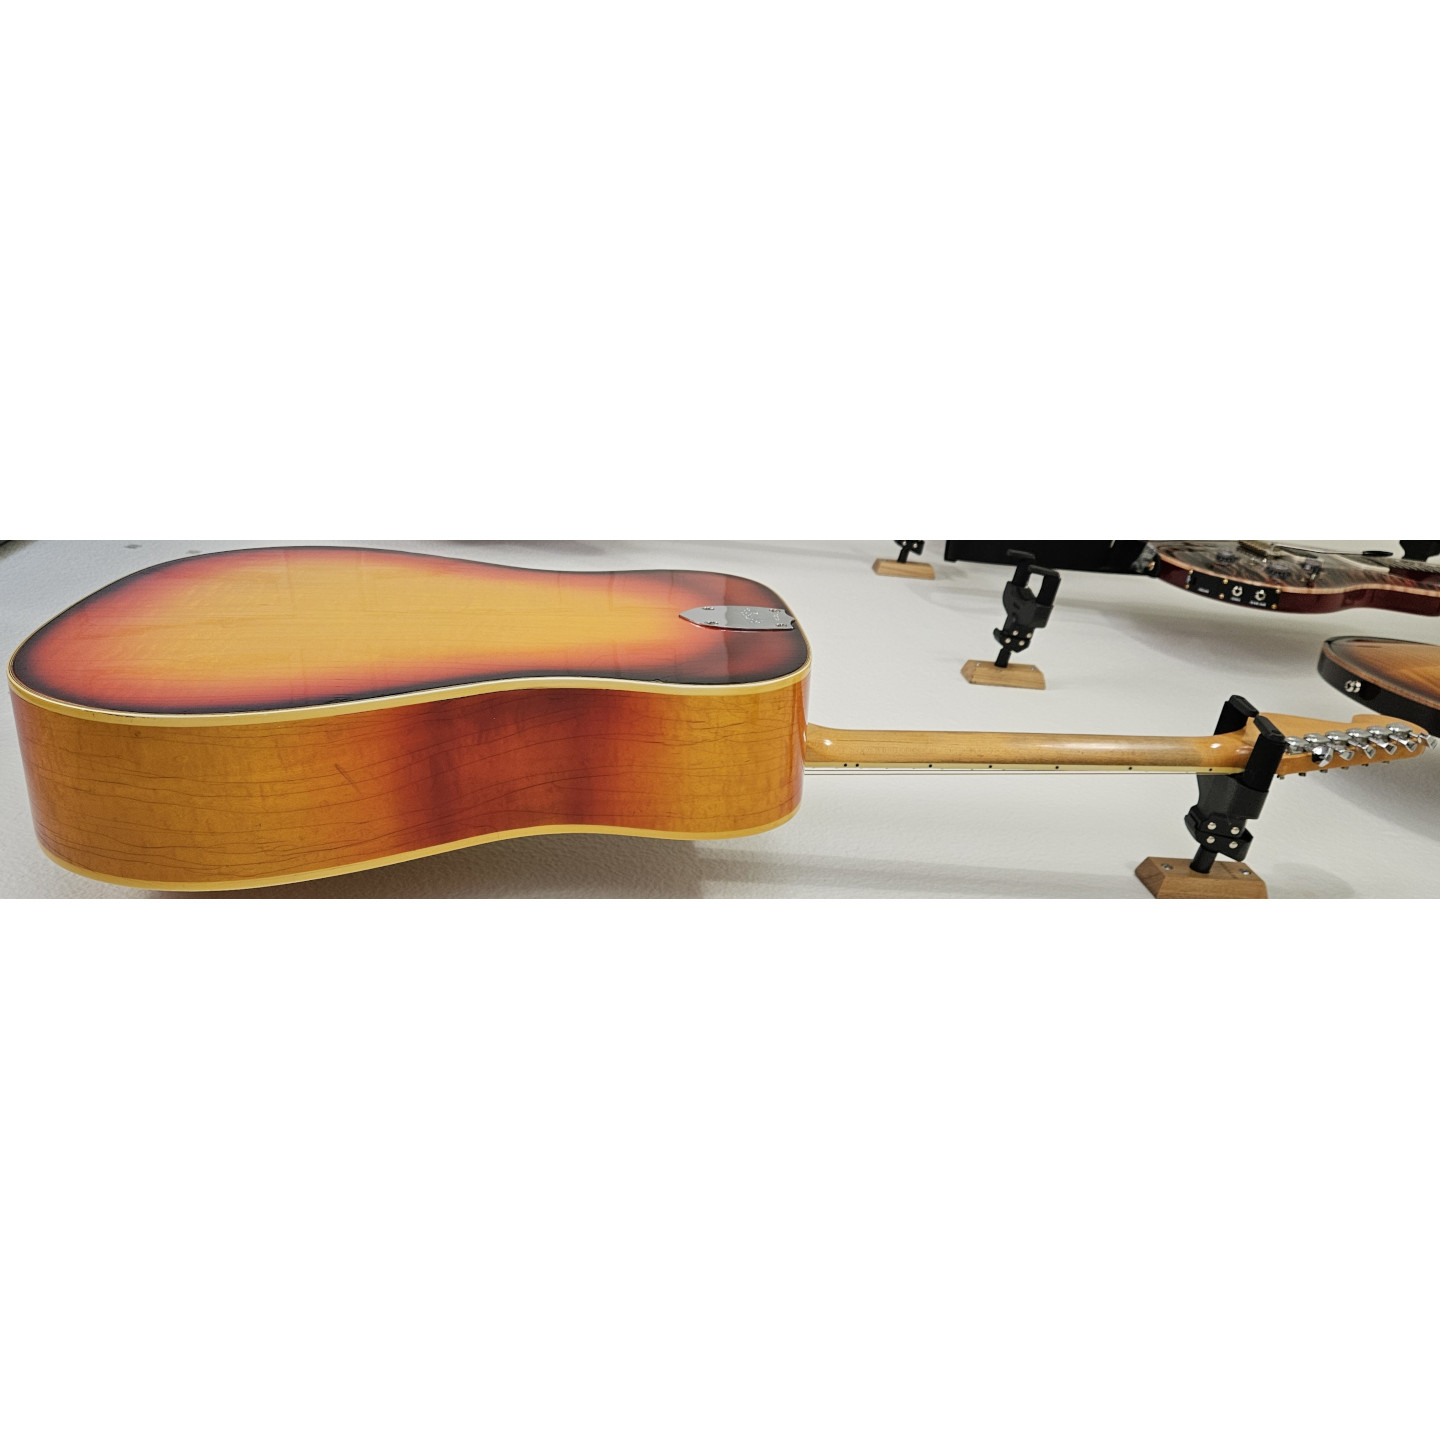 1966 Fender Kingman Sunburst Vintage Dreadnought Acoustic Guitar